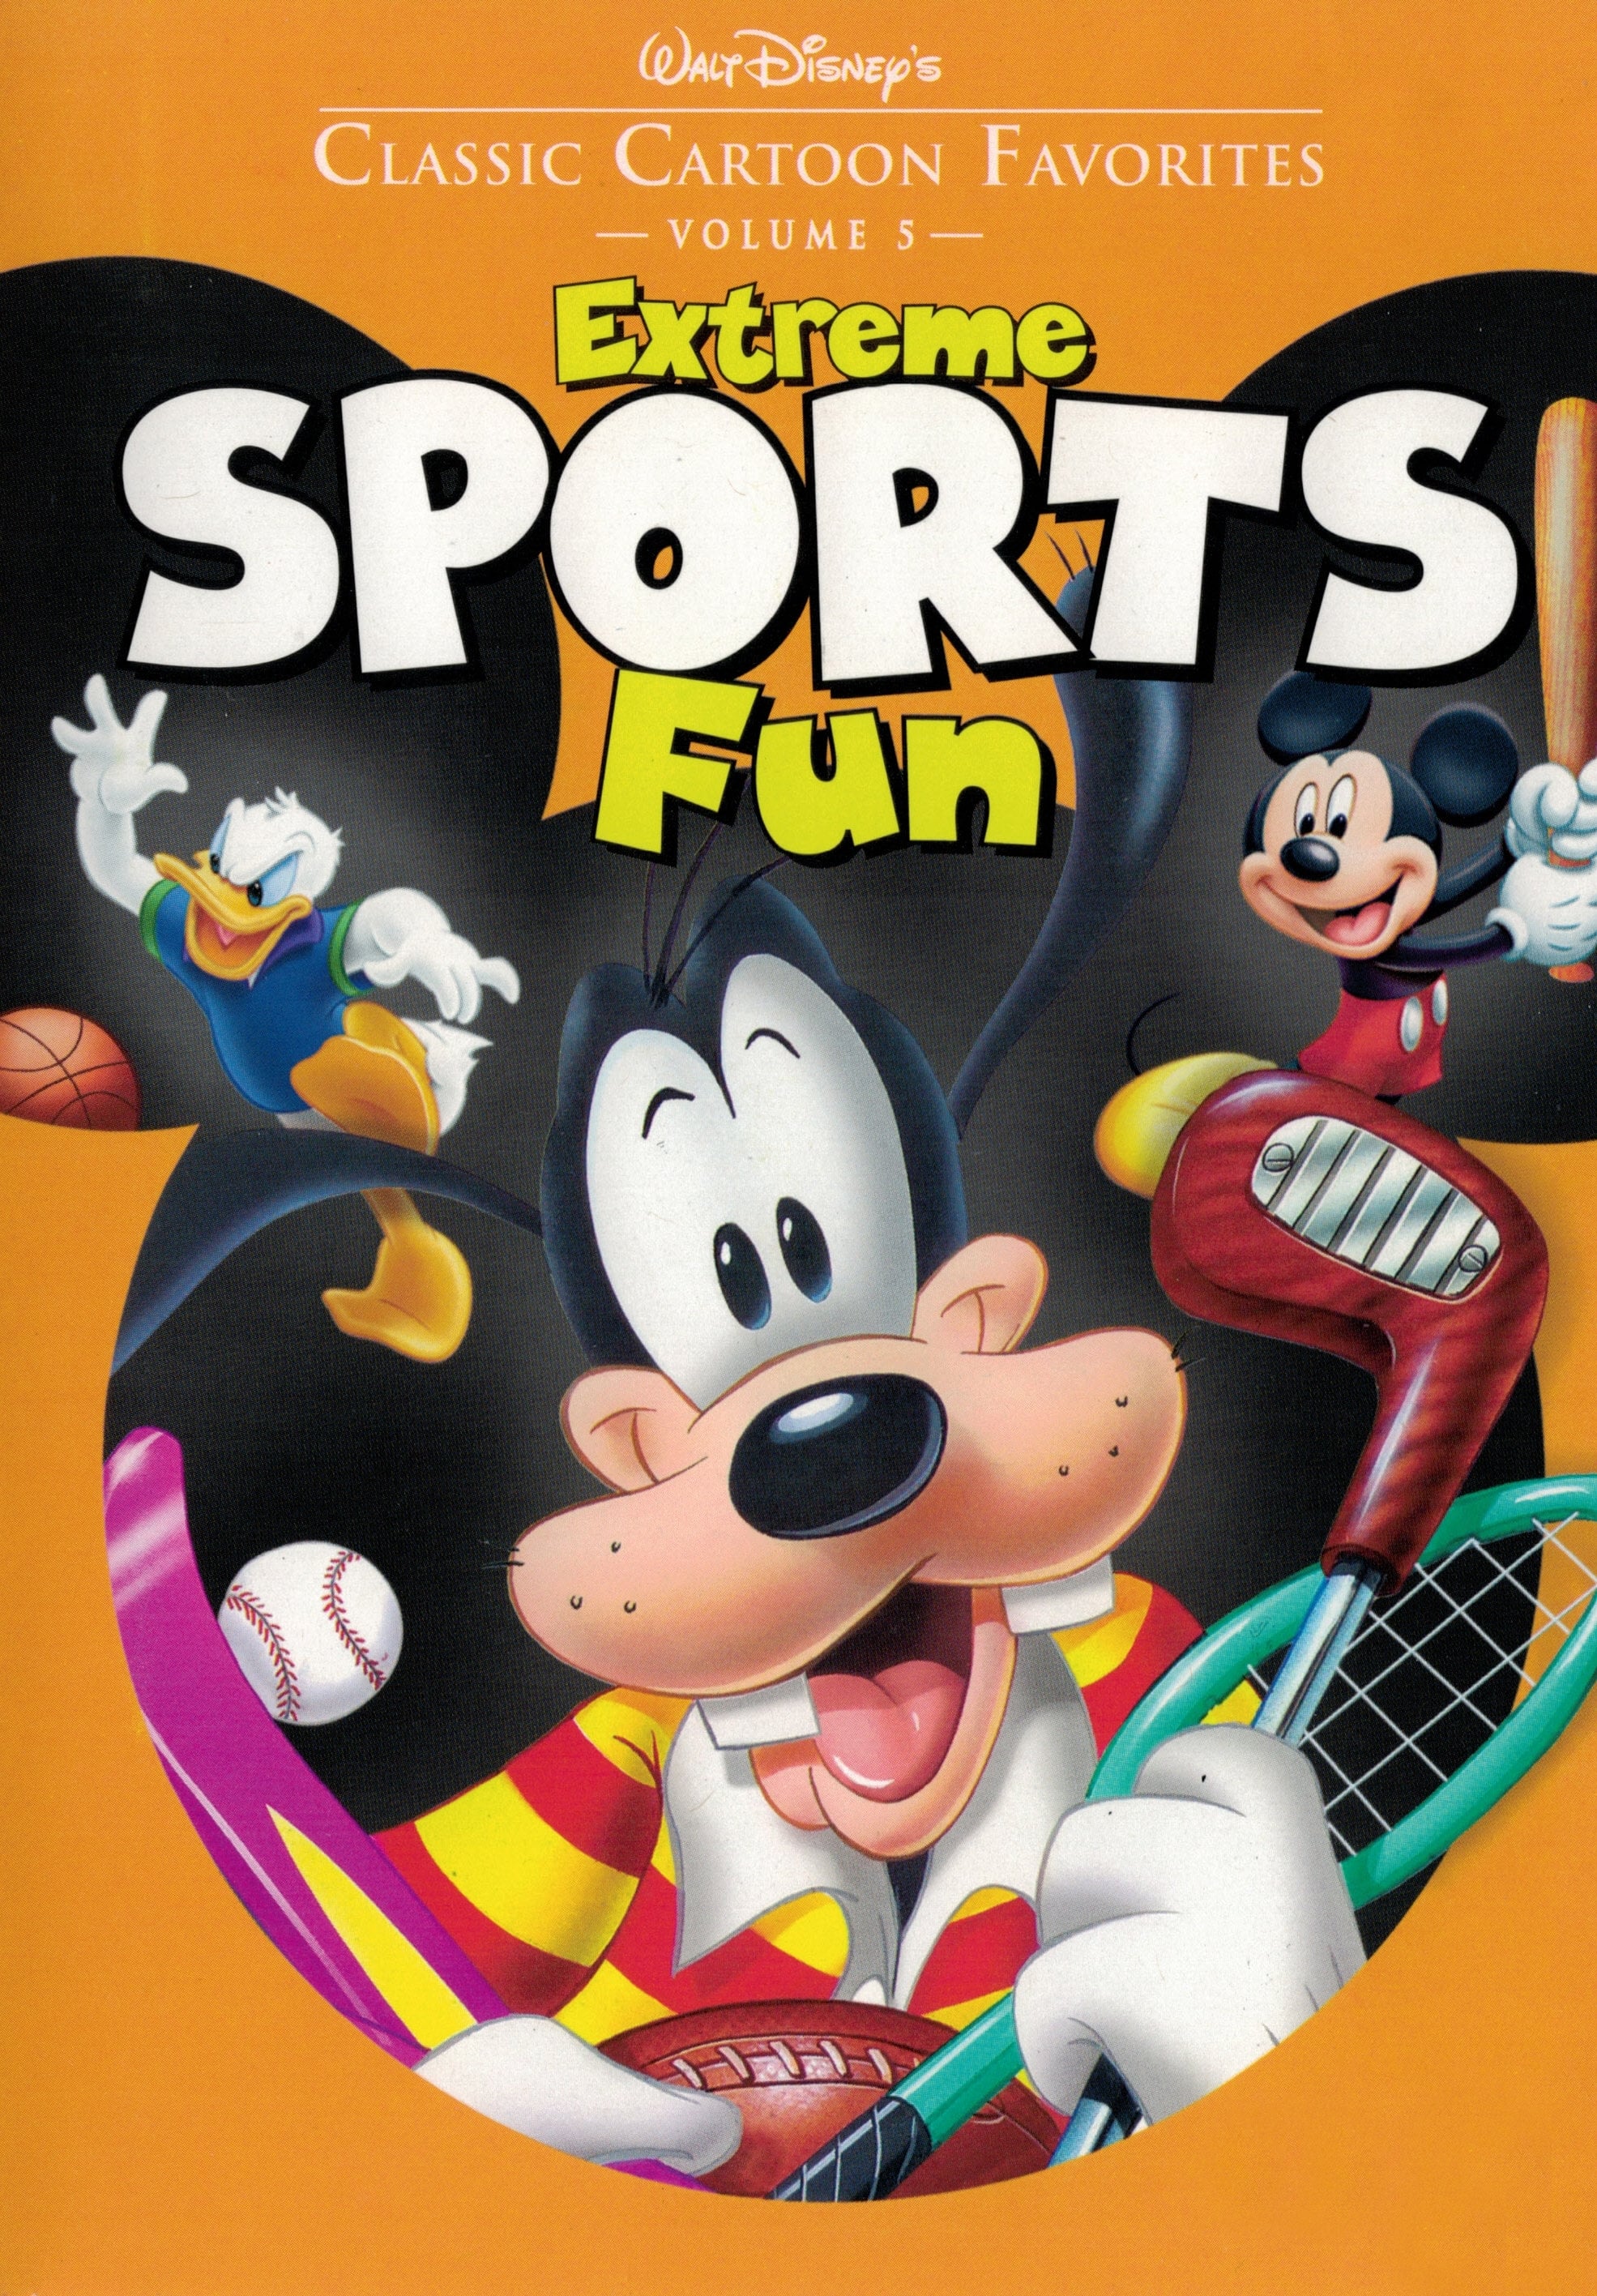 Classic Cartoon Favorites, Vol. 5 - Extreme Sports Fun